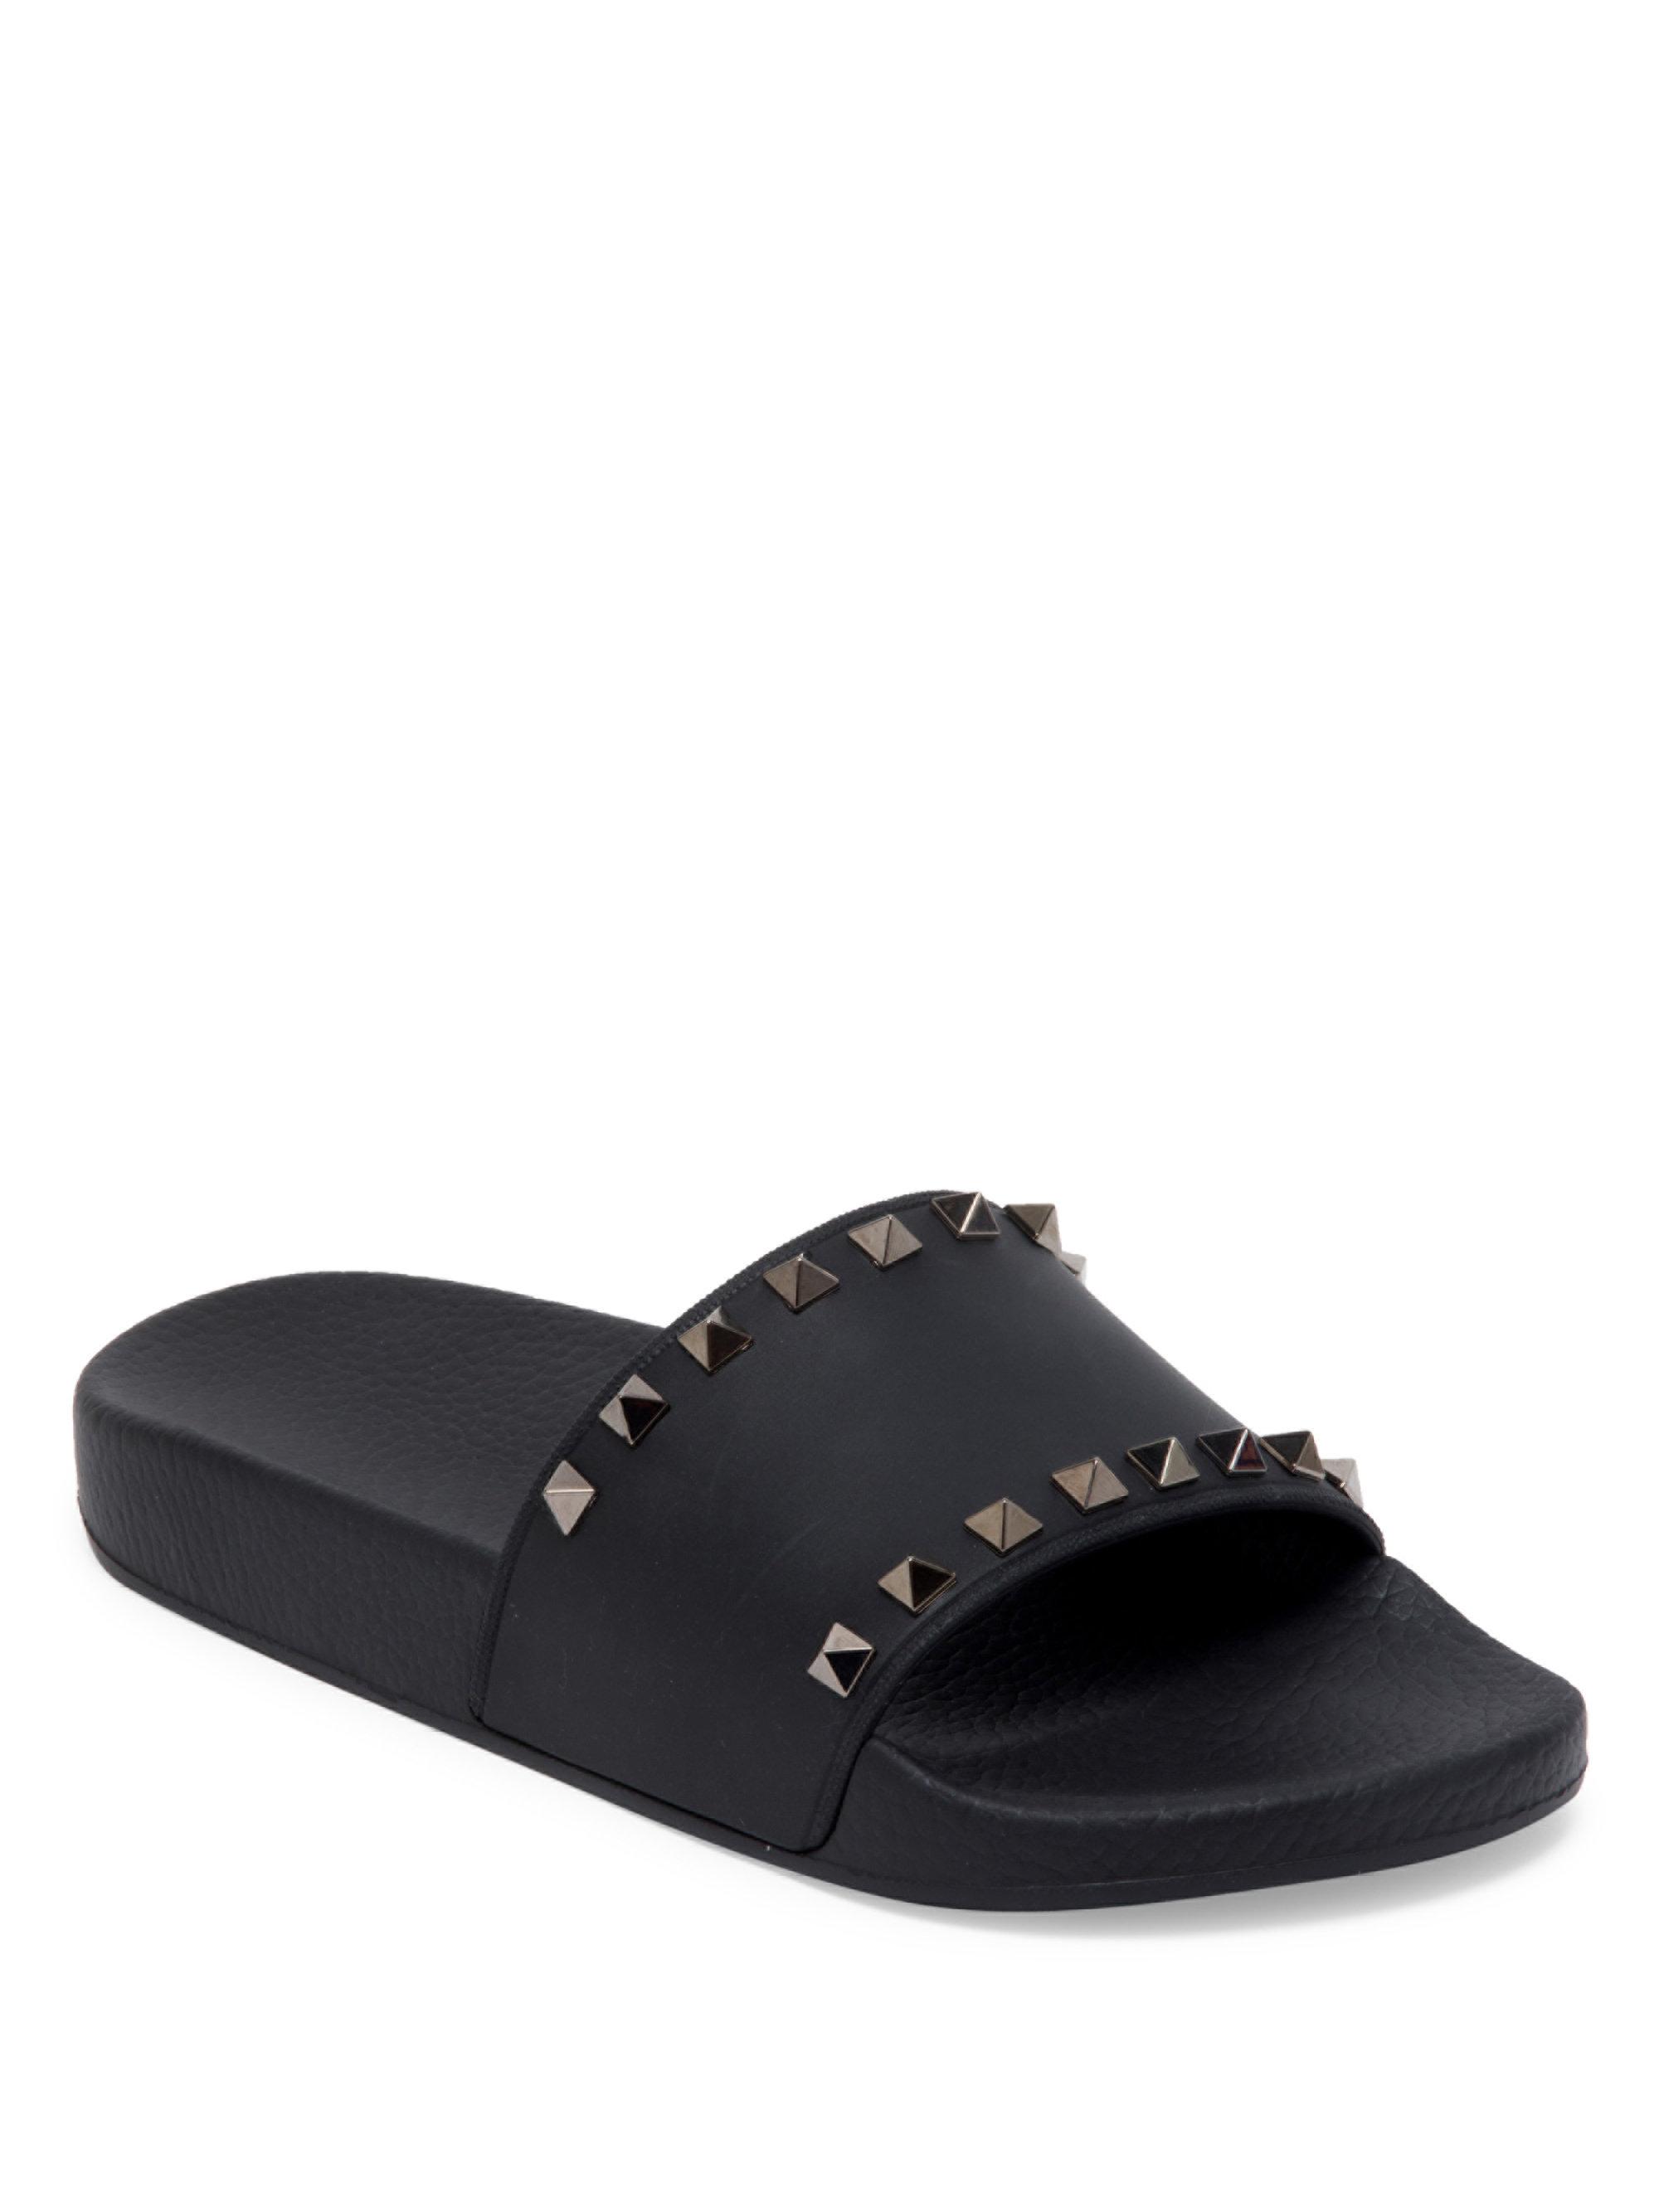 Lyst - Valentino Rockstud Rubber Slide Sandal in Black